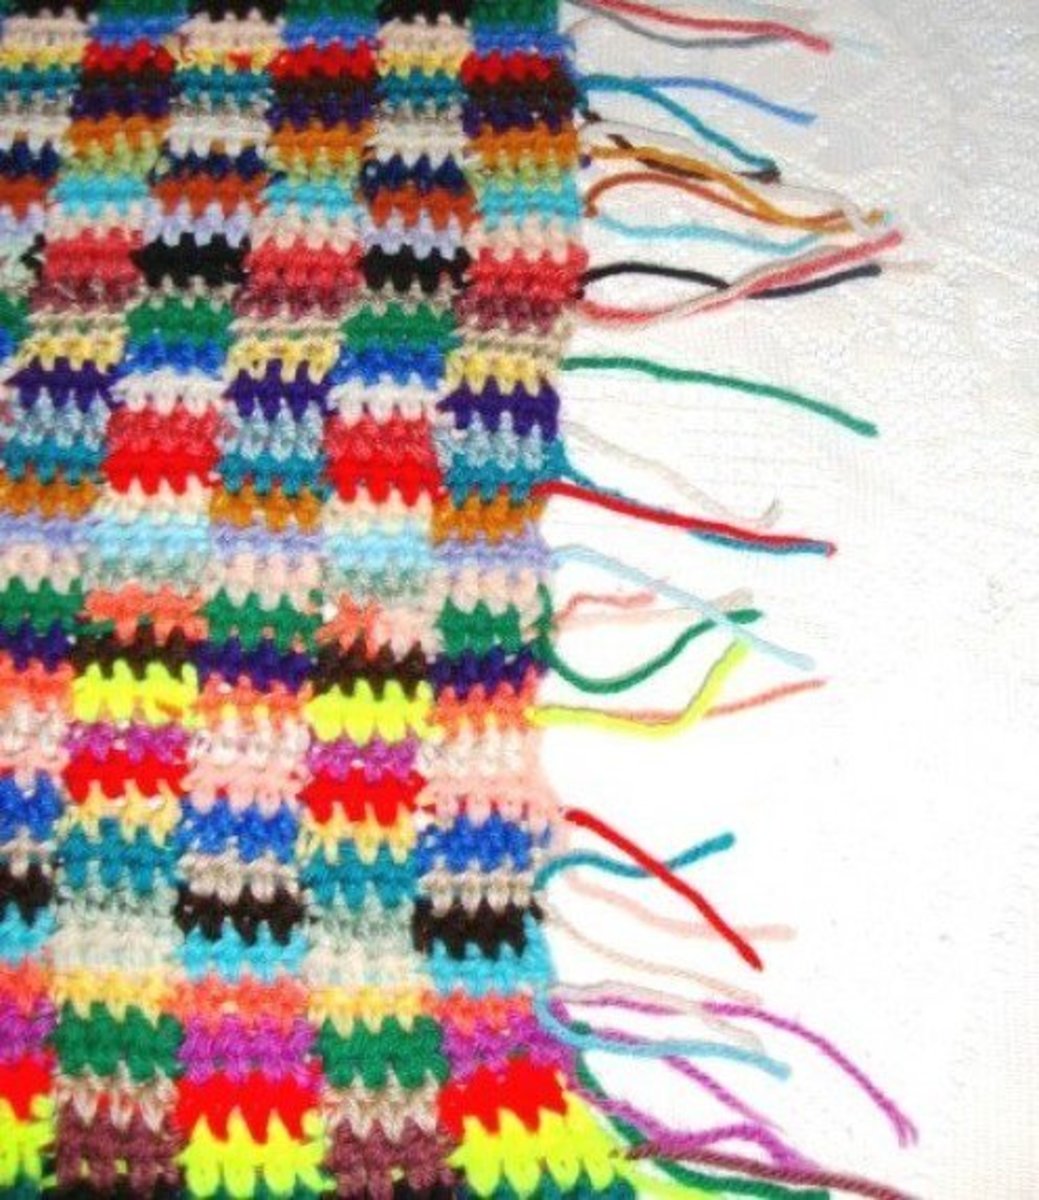 Tied yarn ends